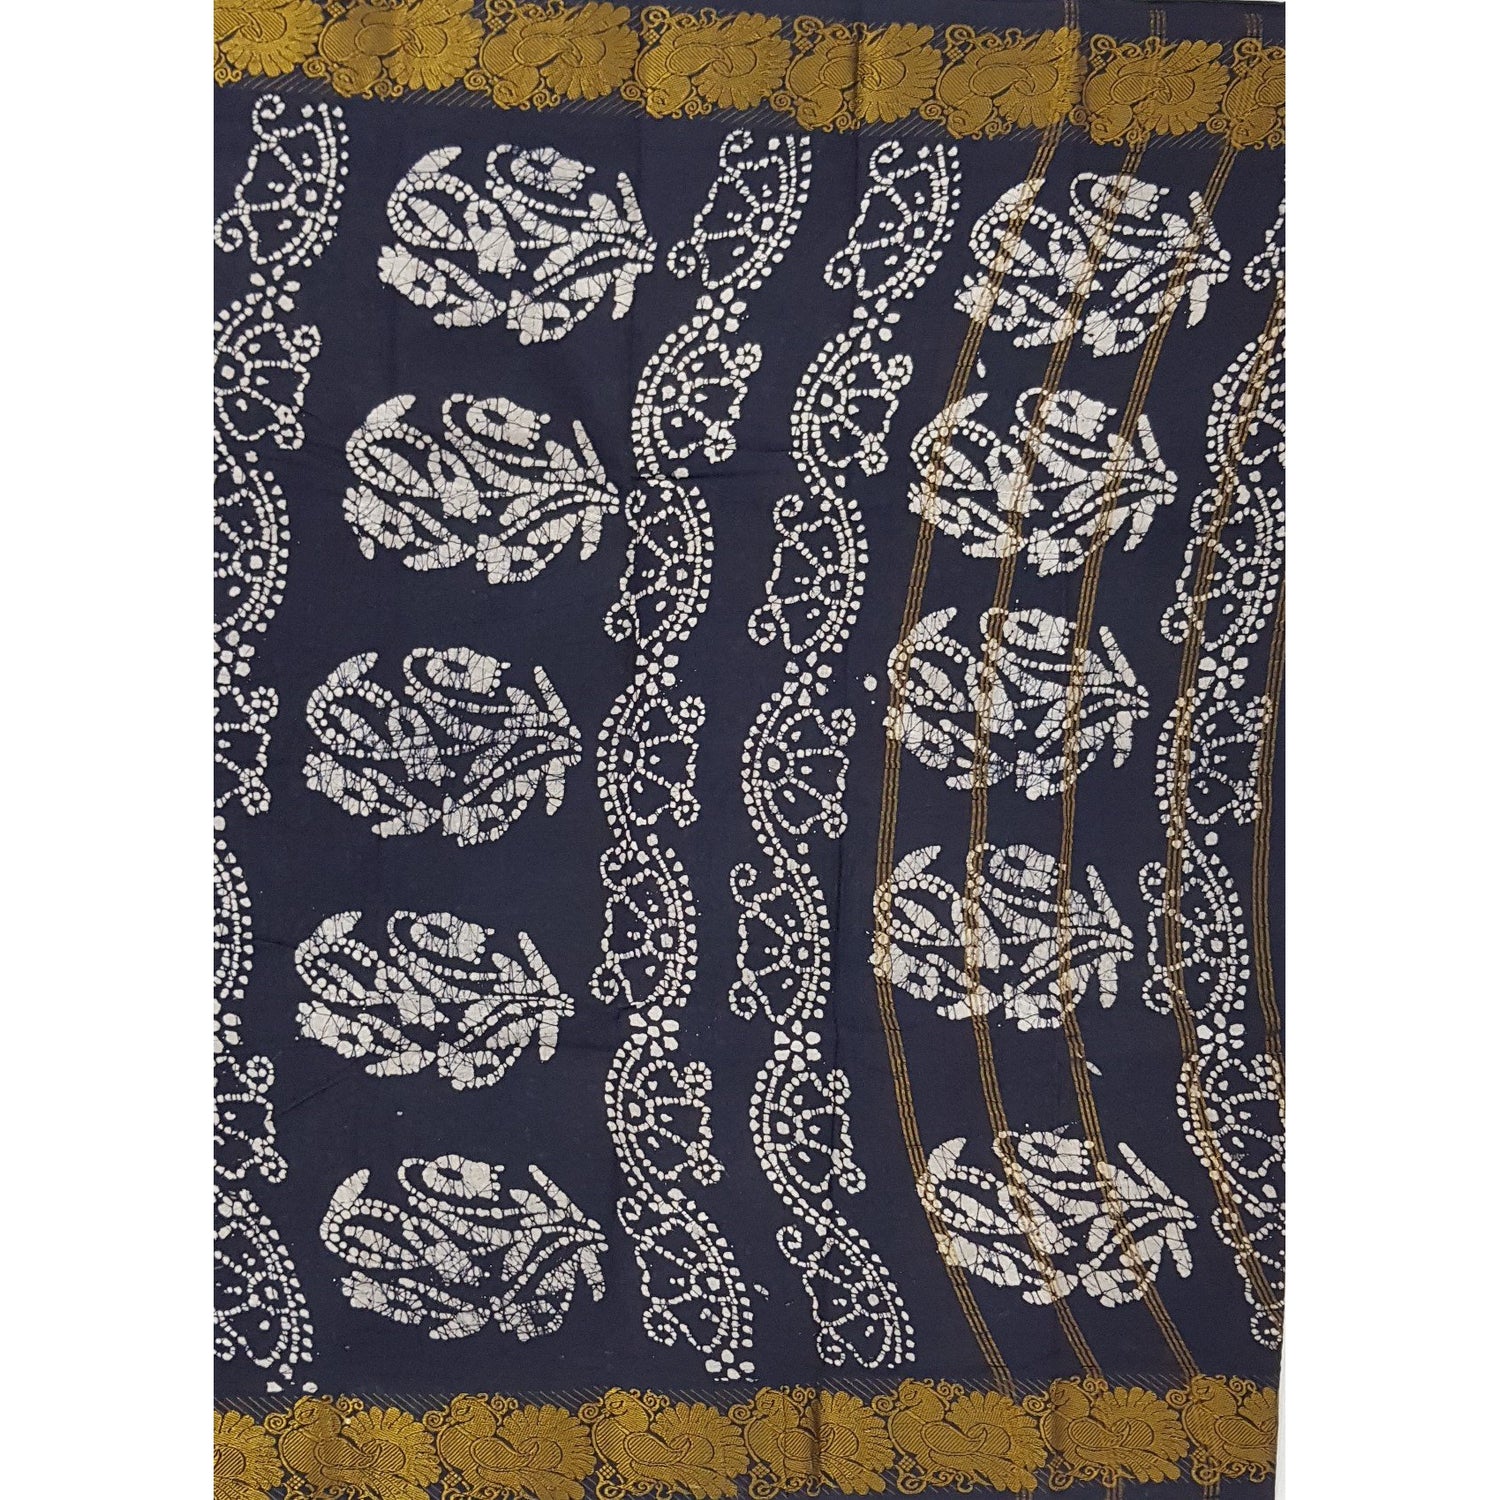 Black Color Madhurai Sungudi cotton saree with batik print - Vinshika